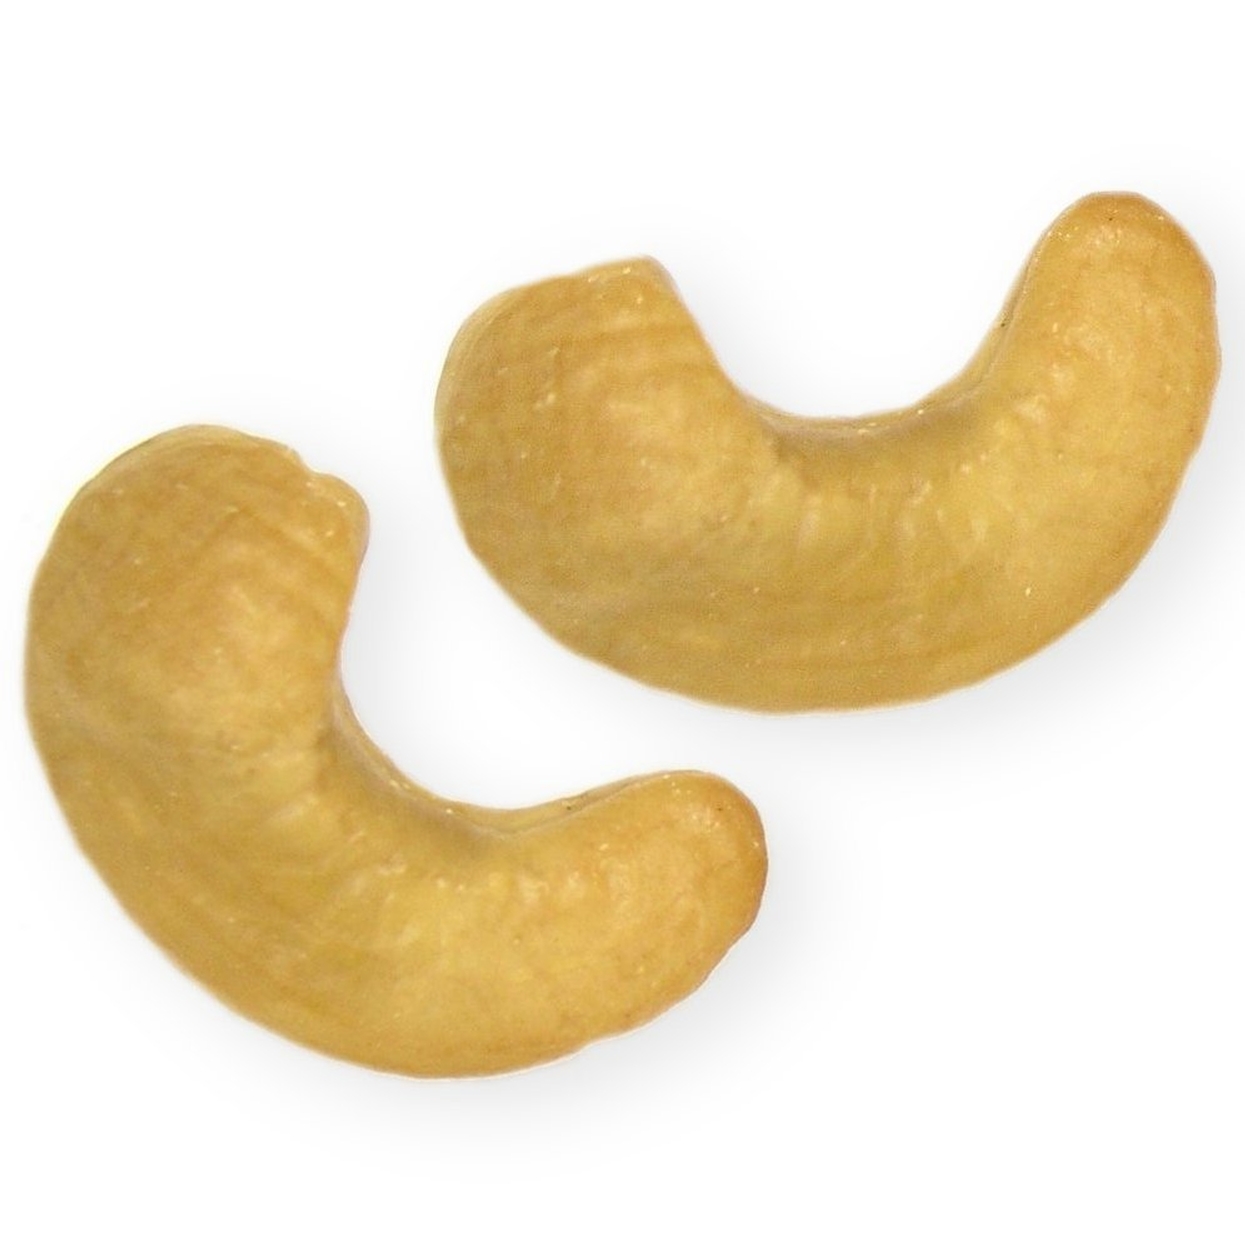 unsalted cashews